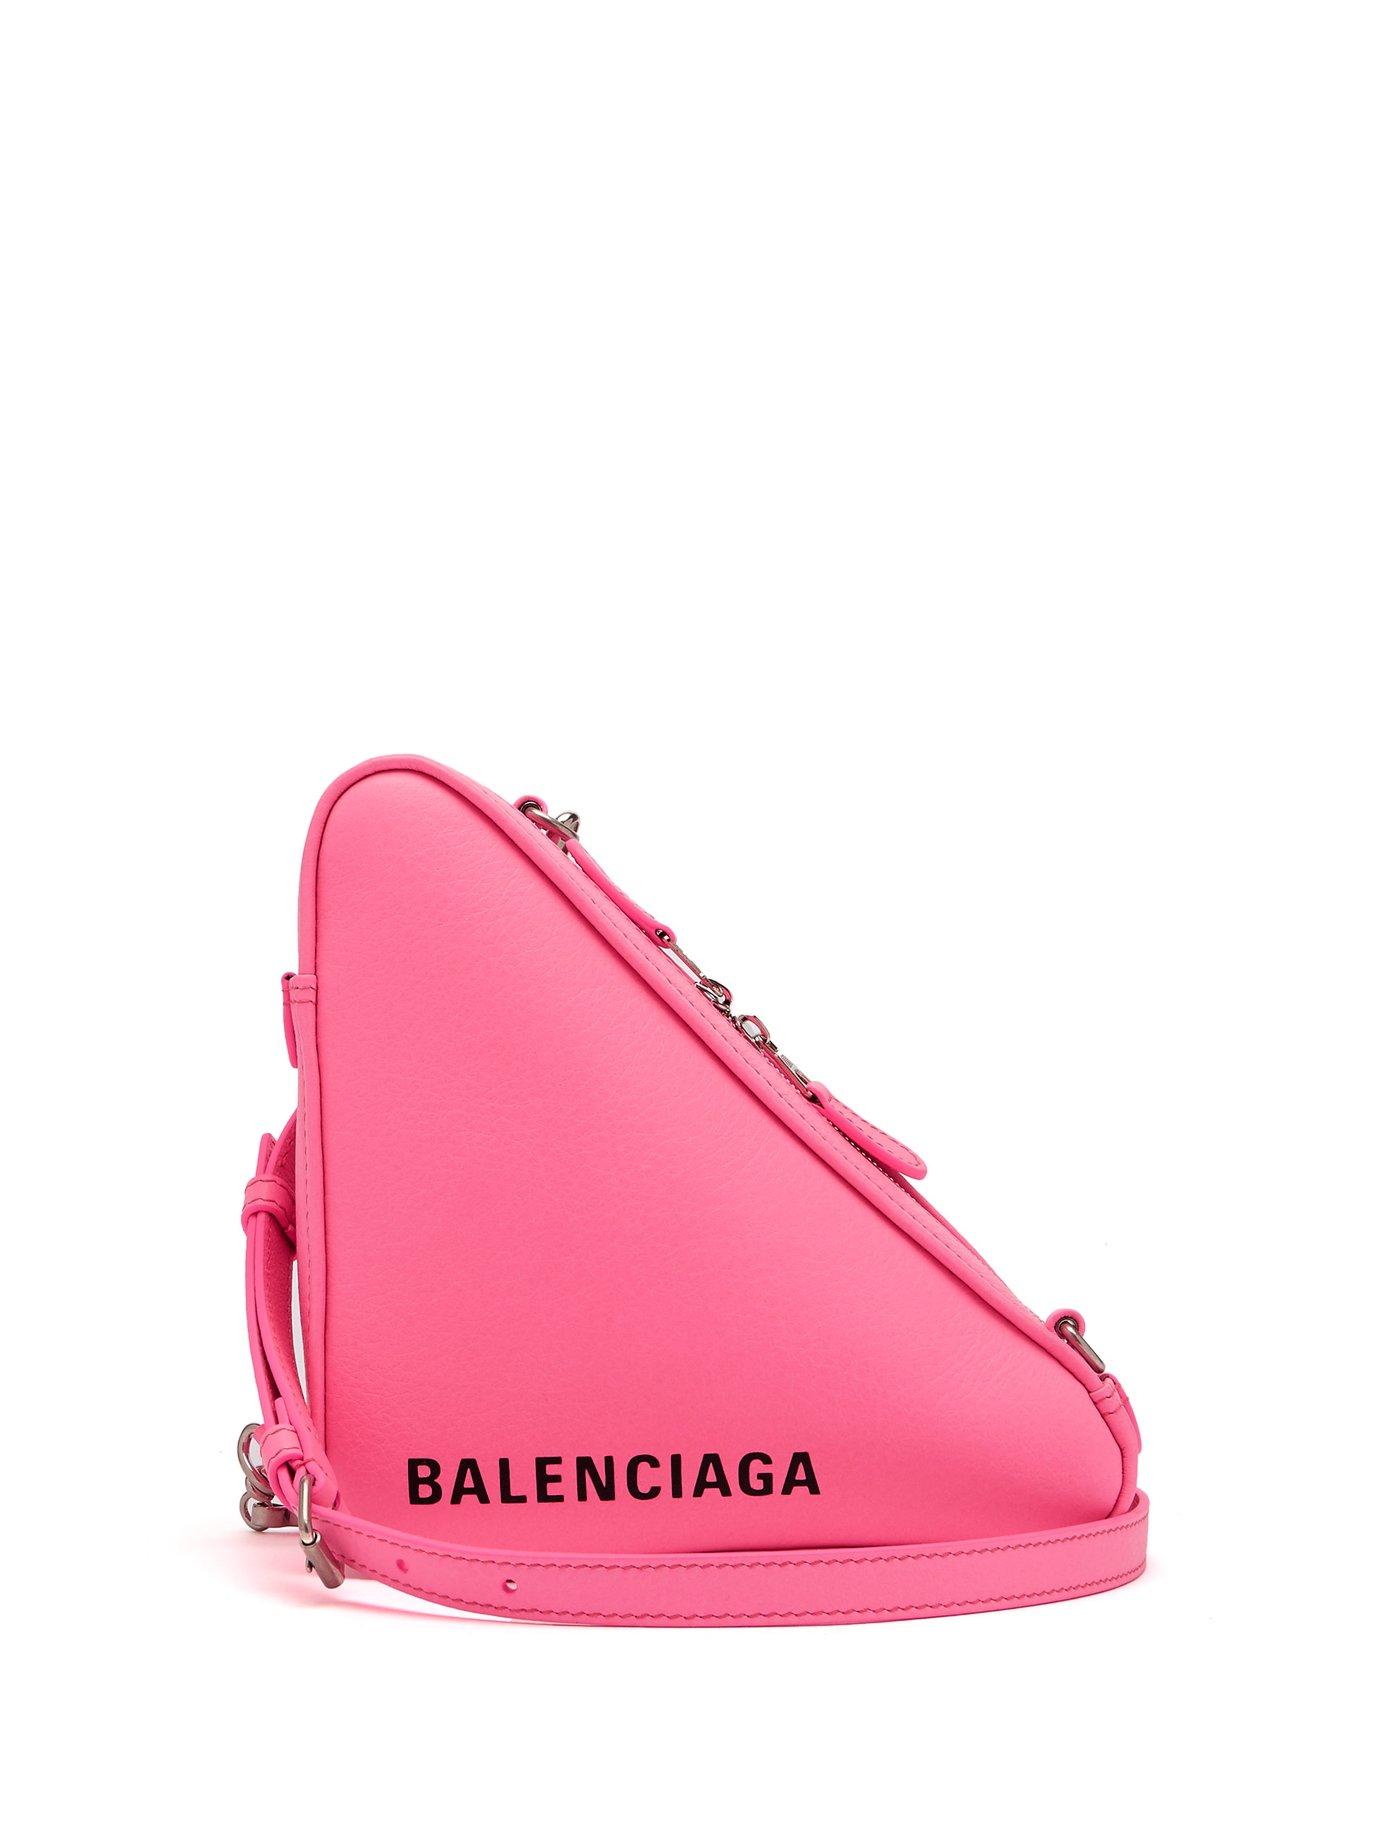 Balenciaga Leather Triangle Pouch Crossbody Bag in Pink | Lyst